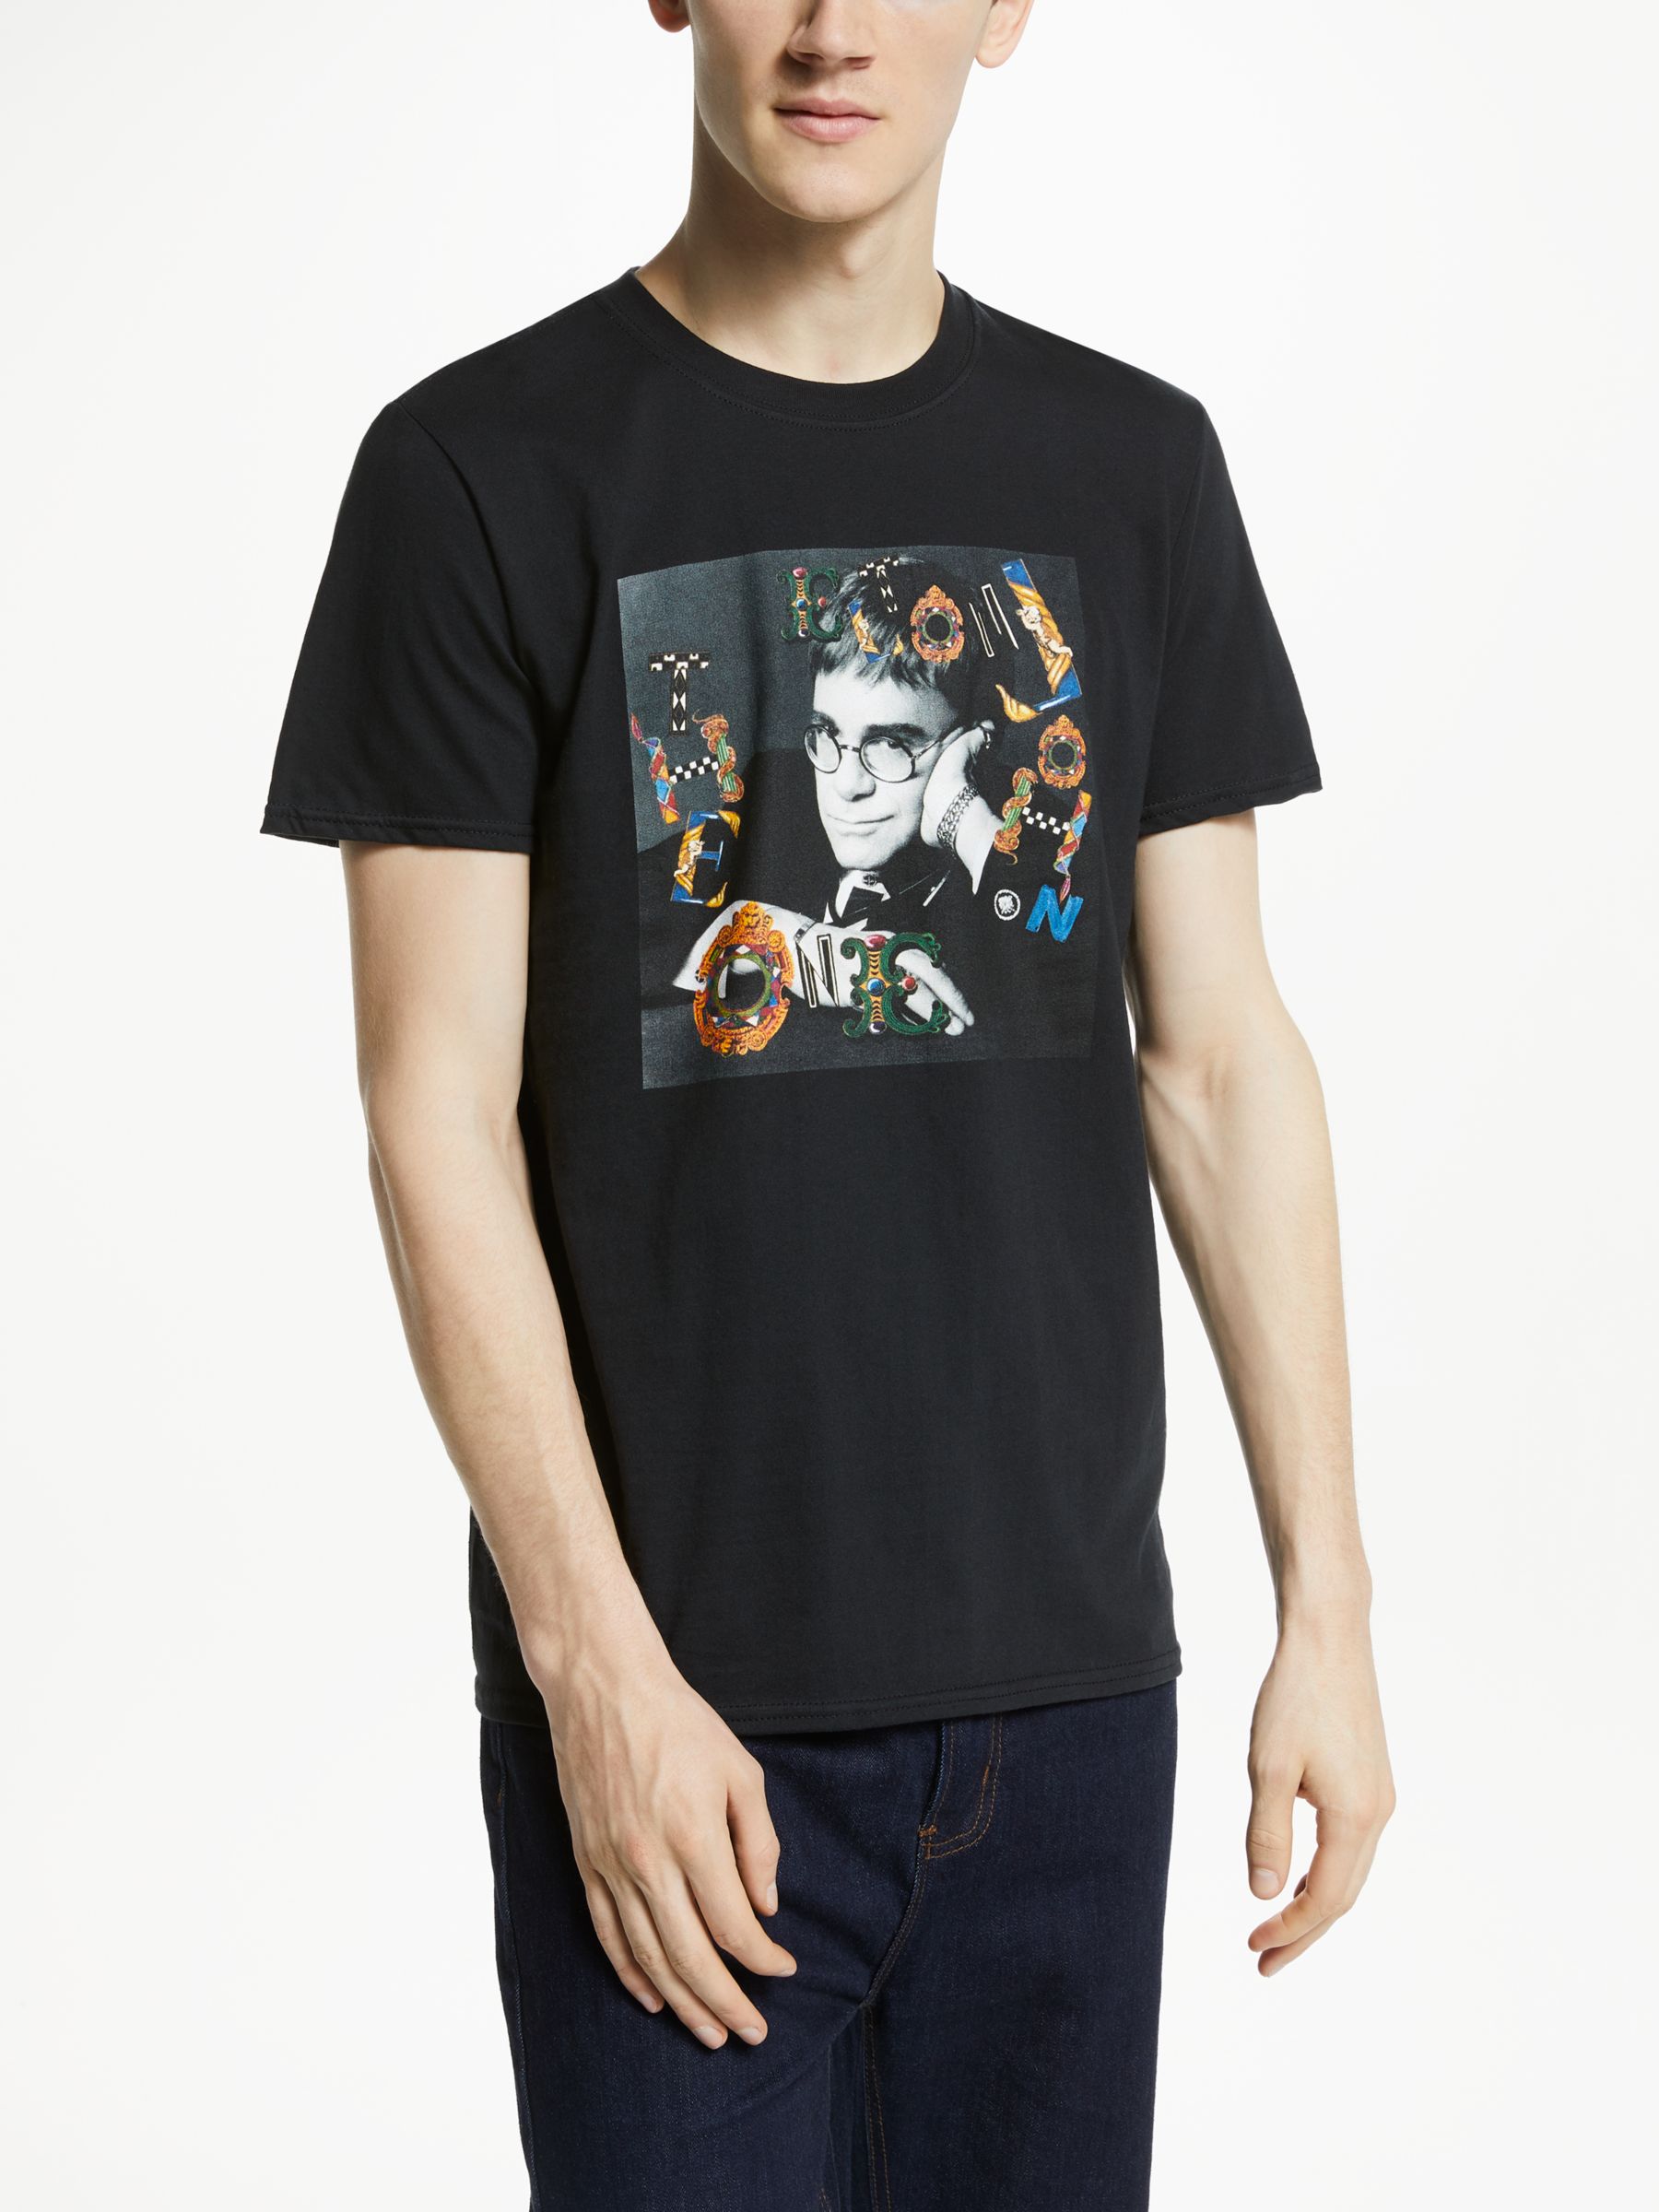 Elton John Vintage Image Graphic T-Shirt, Black